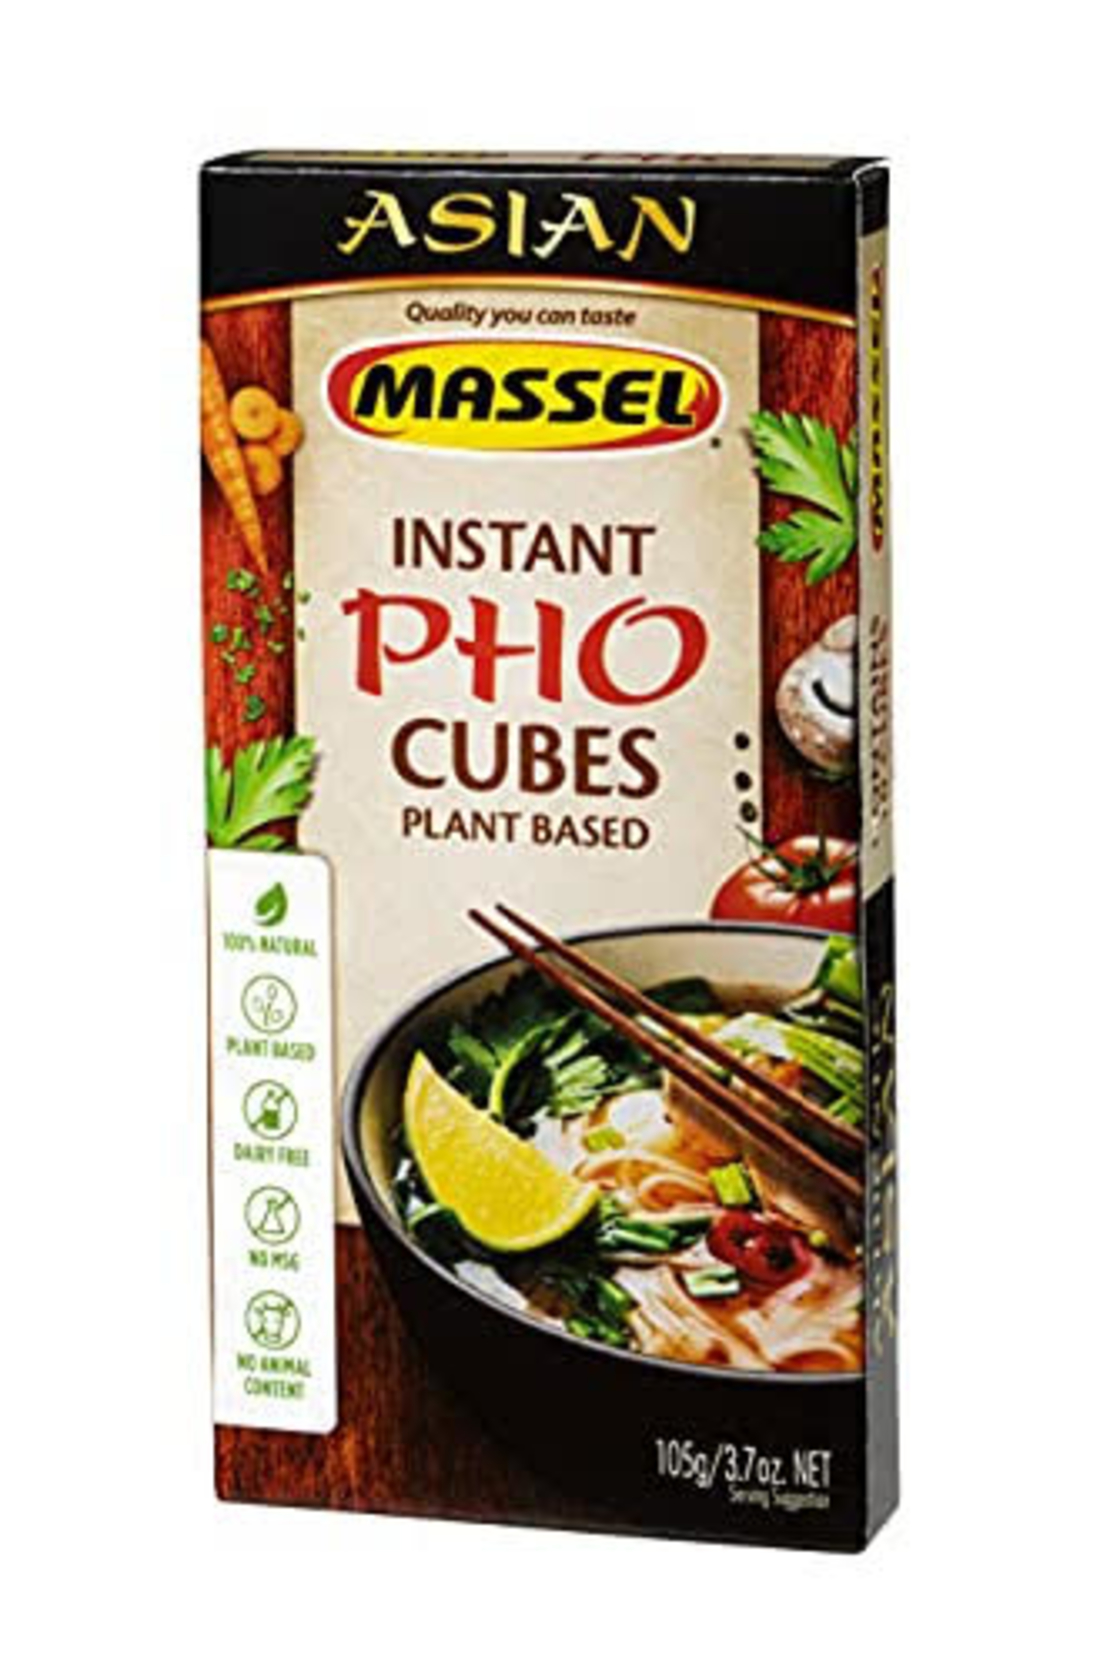 Massel - Asian Instant PHO Cubes 105g Gluten Free